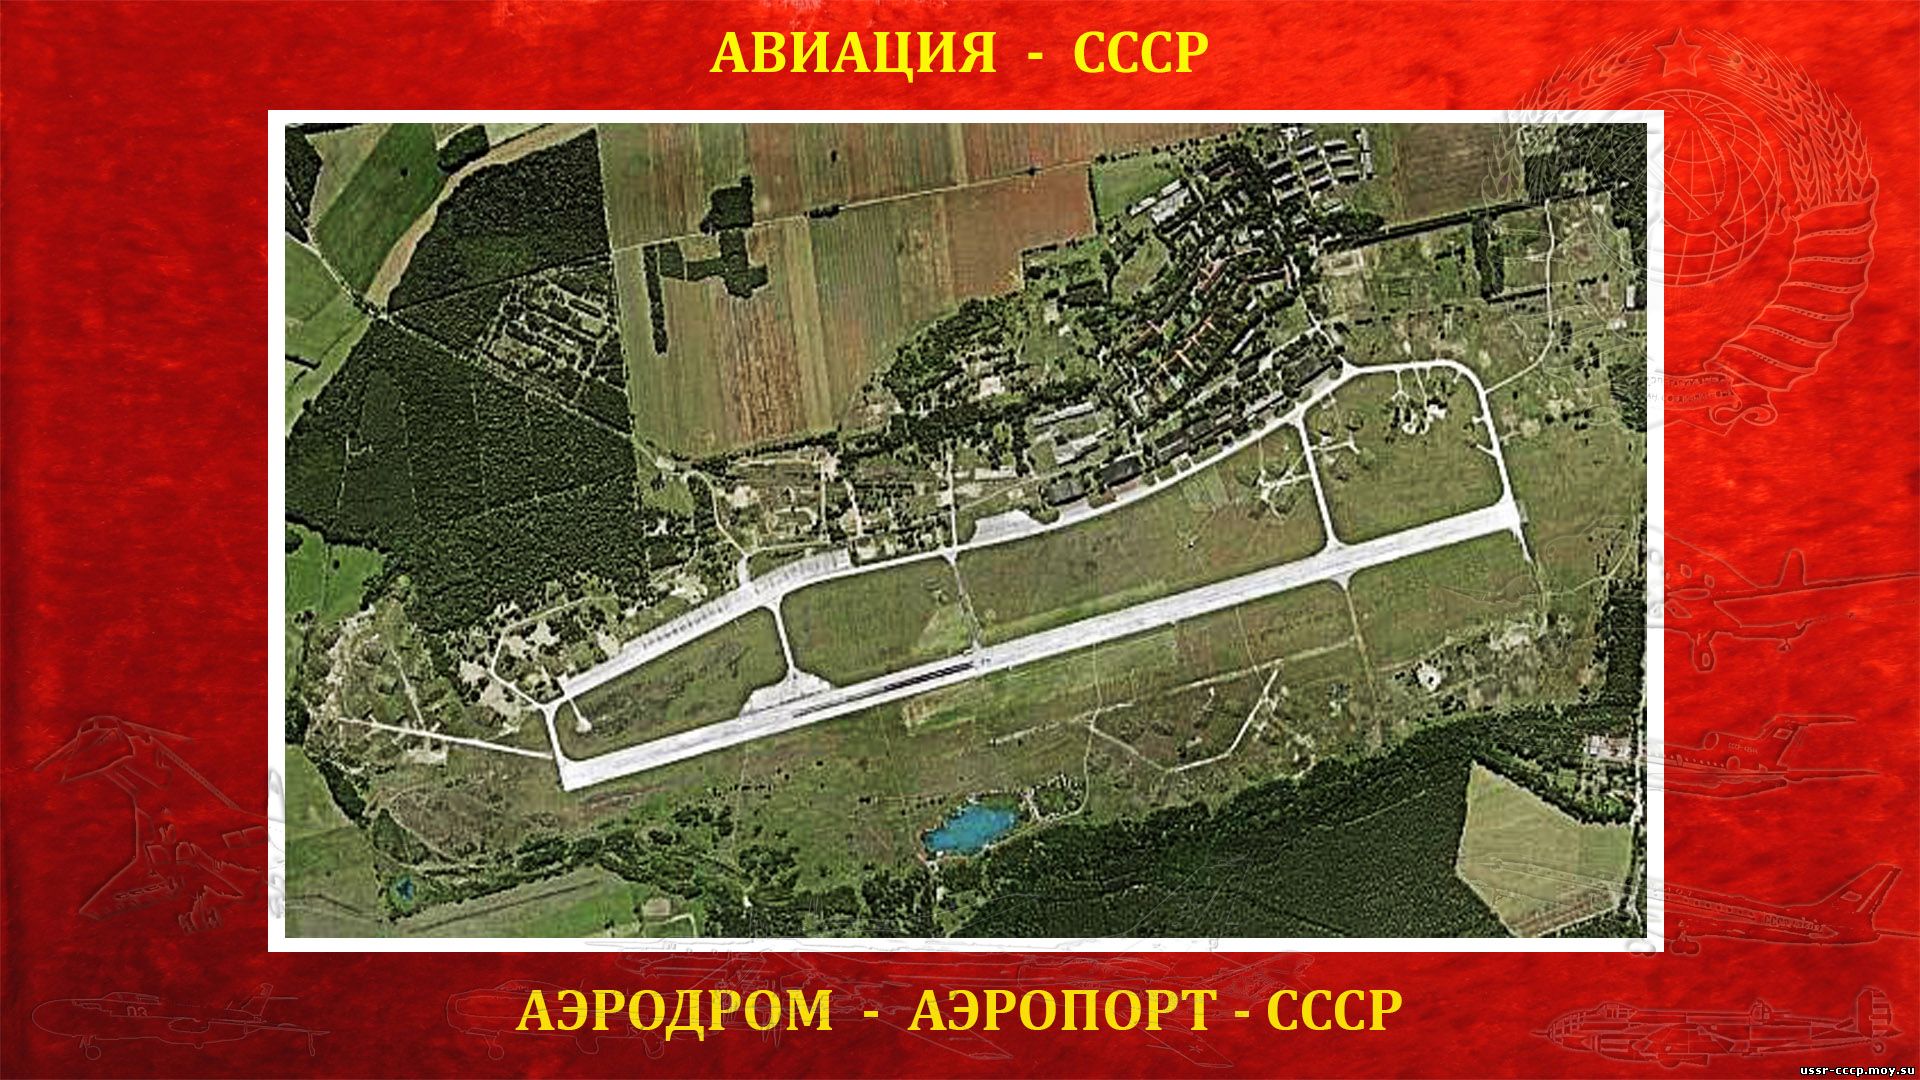 Витшток — Аэродром (Аэропорт) СССР в ГДР (полное повествование)